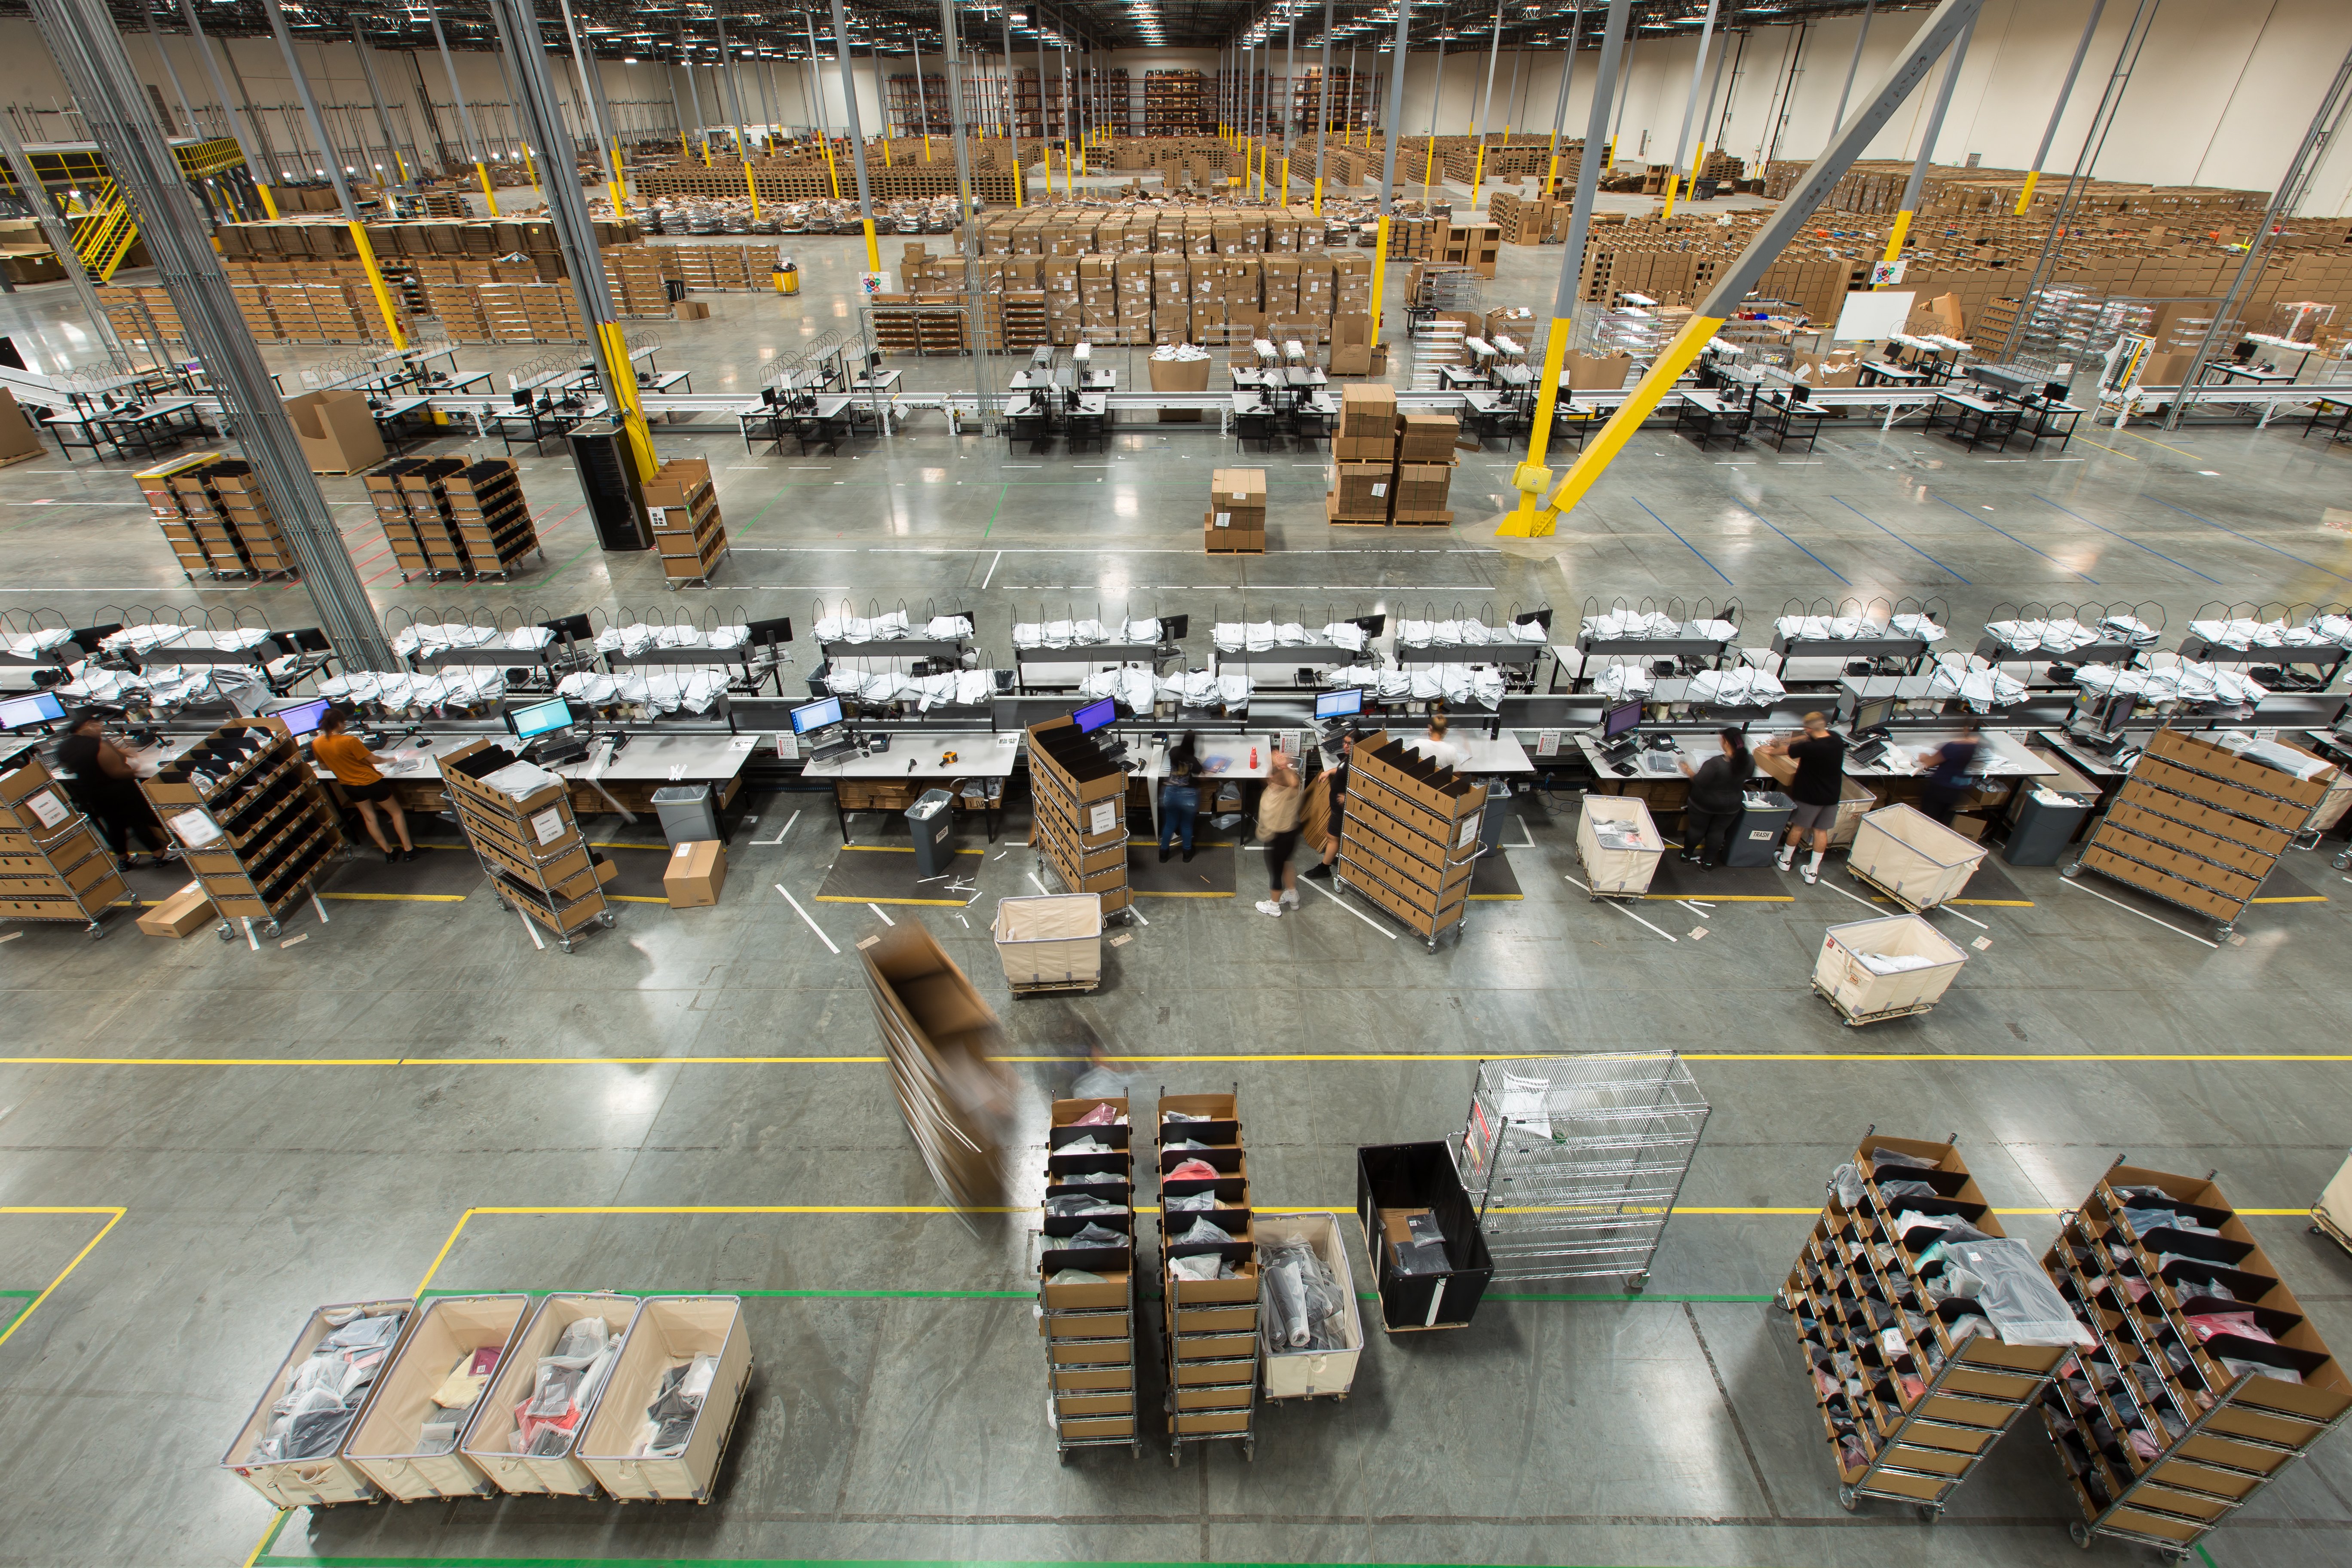 Large warehouse demonstrating efficiently managed labor